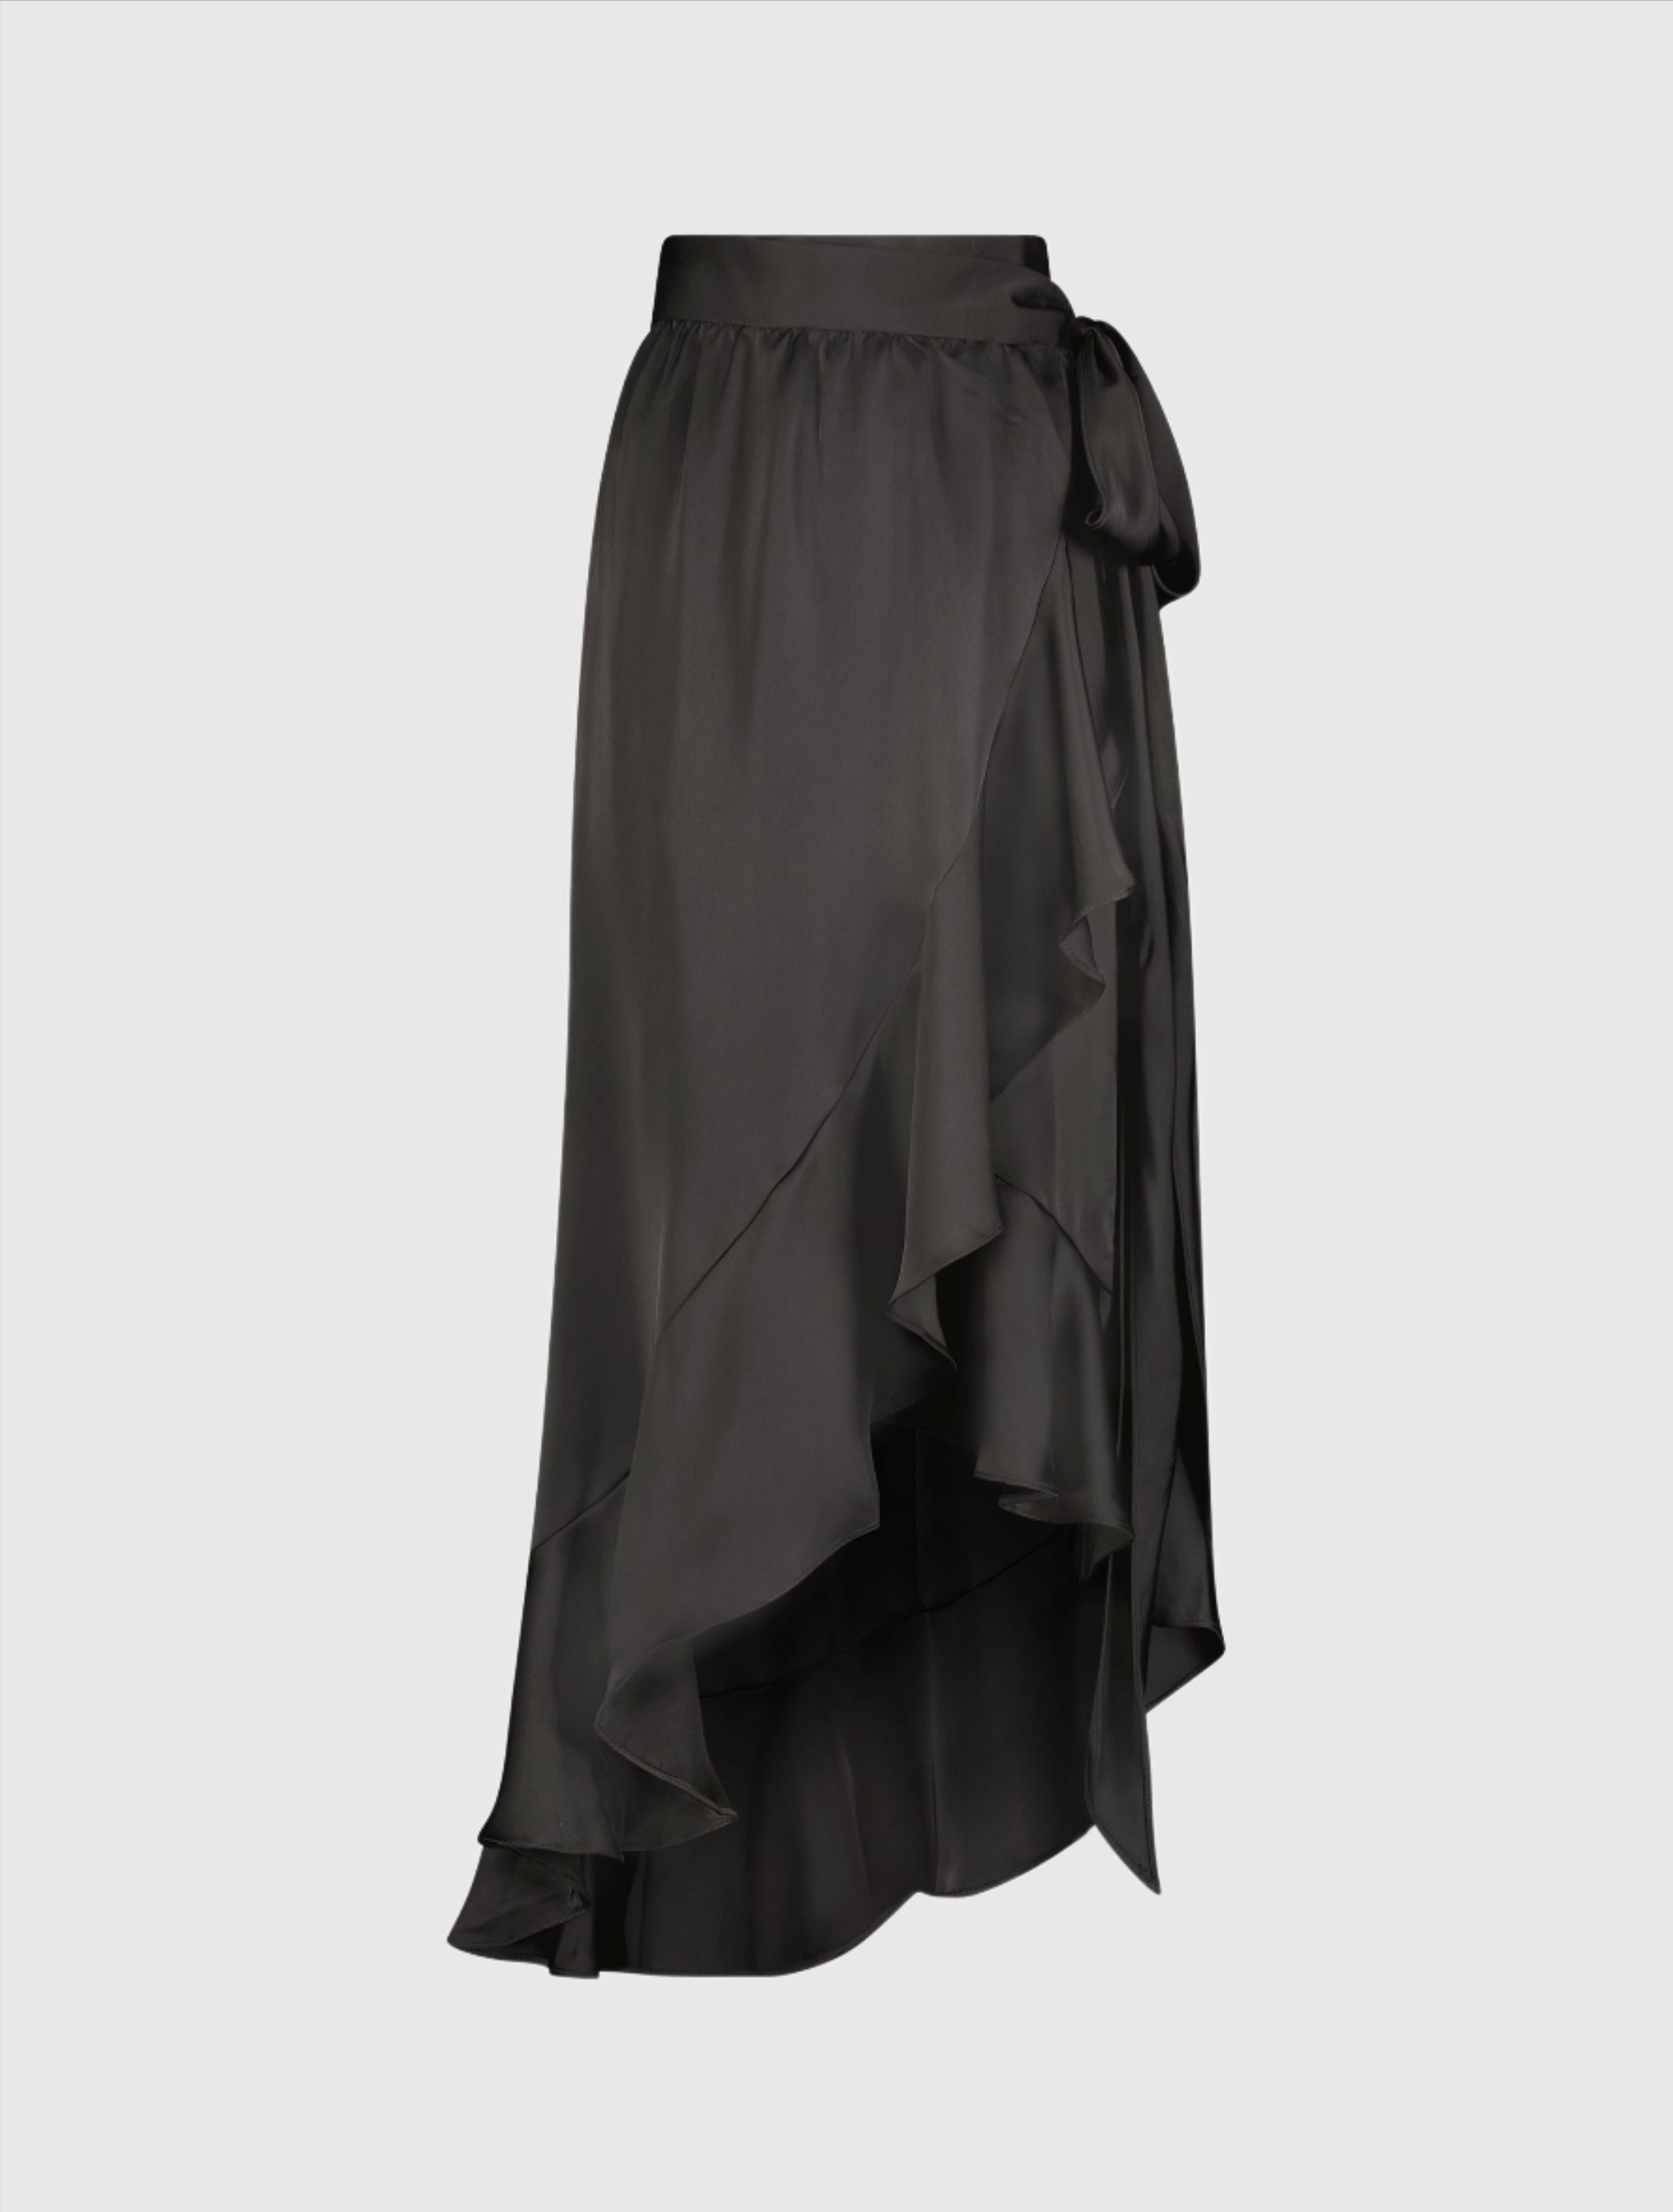 Black satin Hi-low wrap skirt